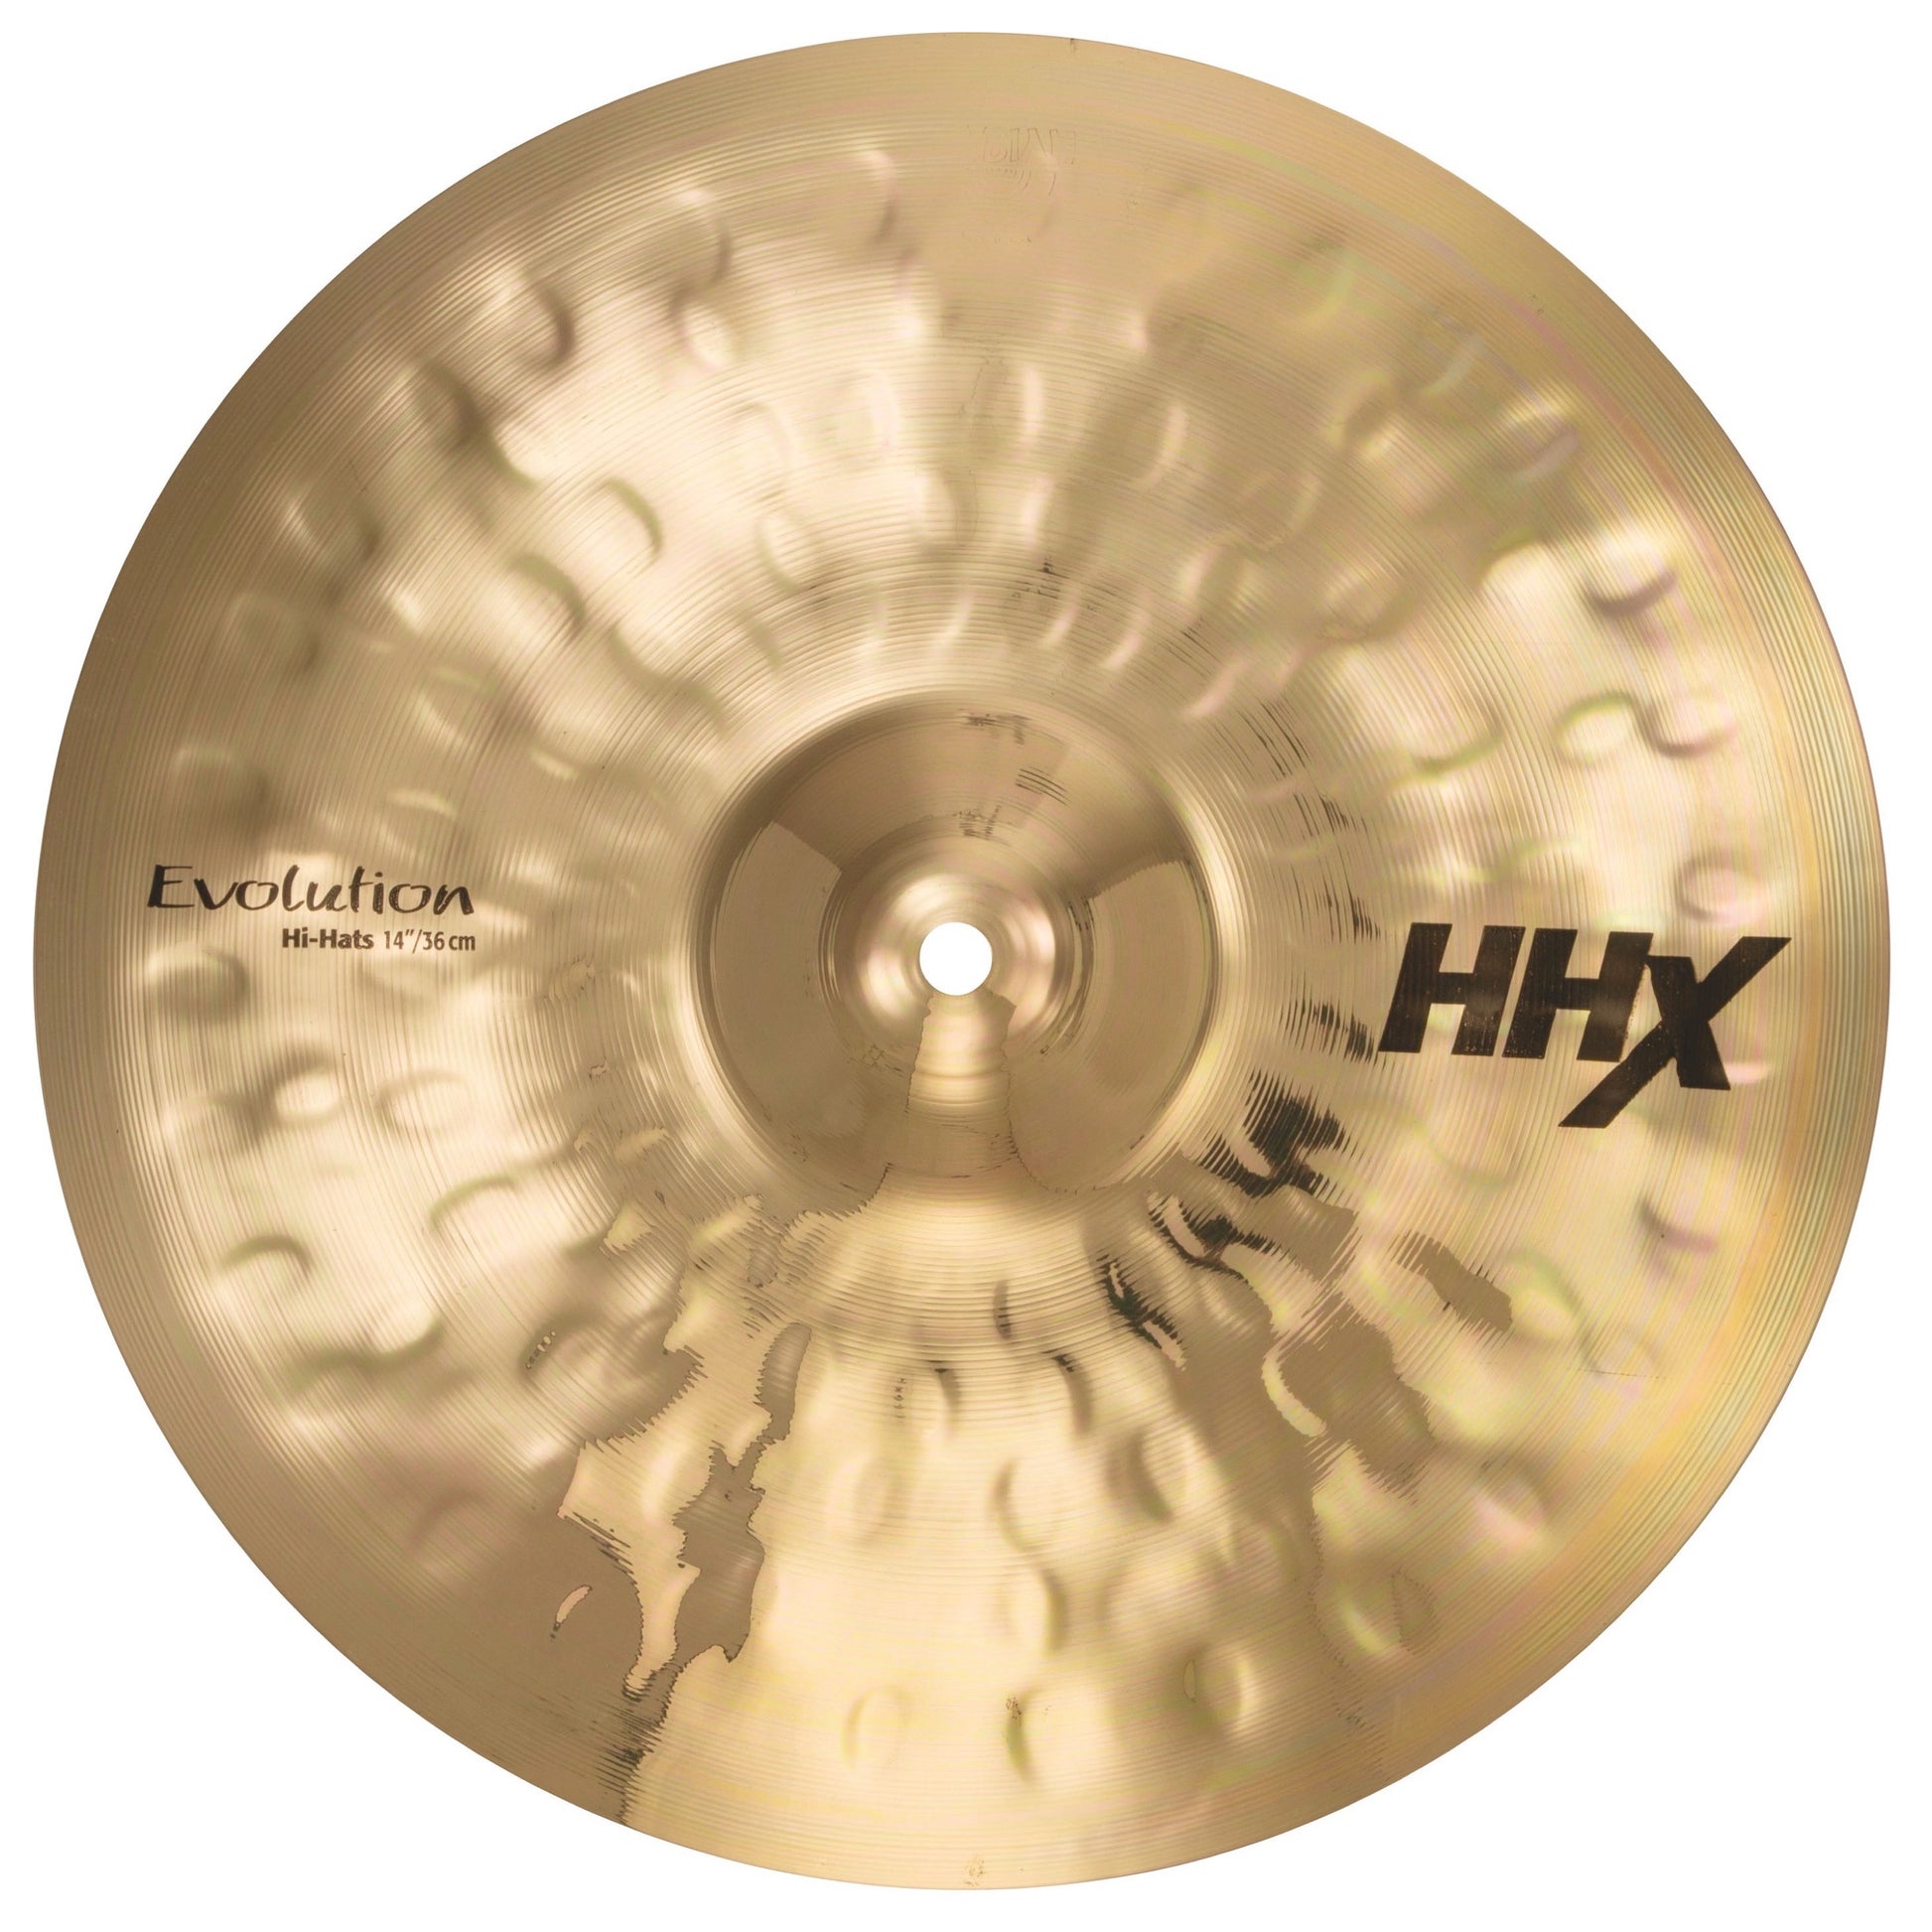 Sabian HHX Evolution Hi-Hat Cymbals, Brilliant Finish, Pair, 14 Inch